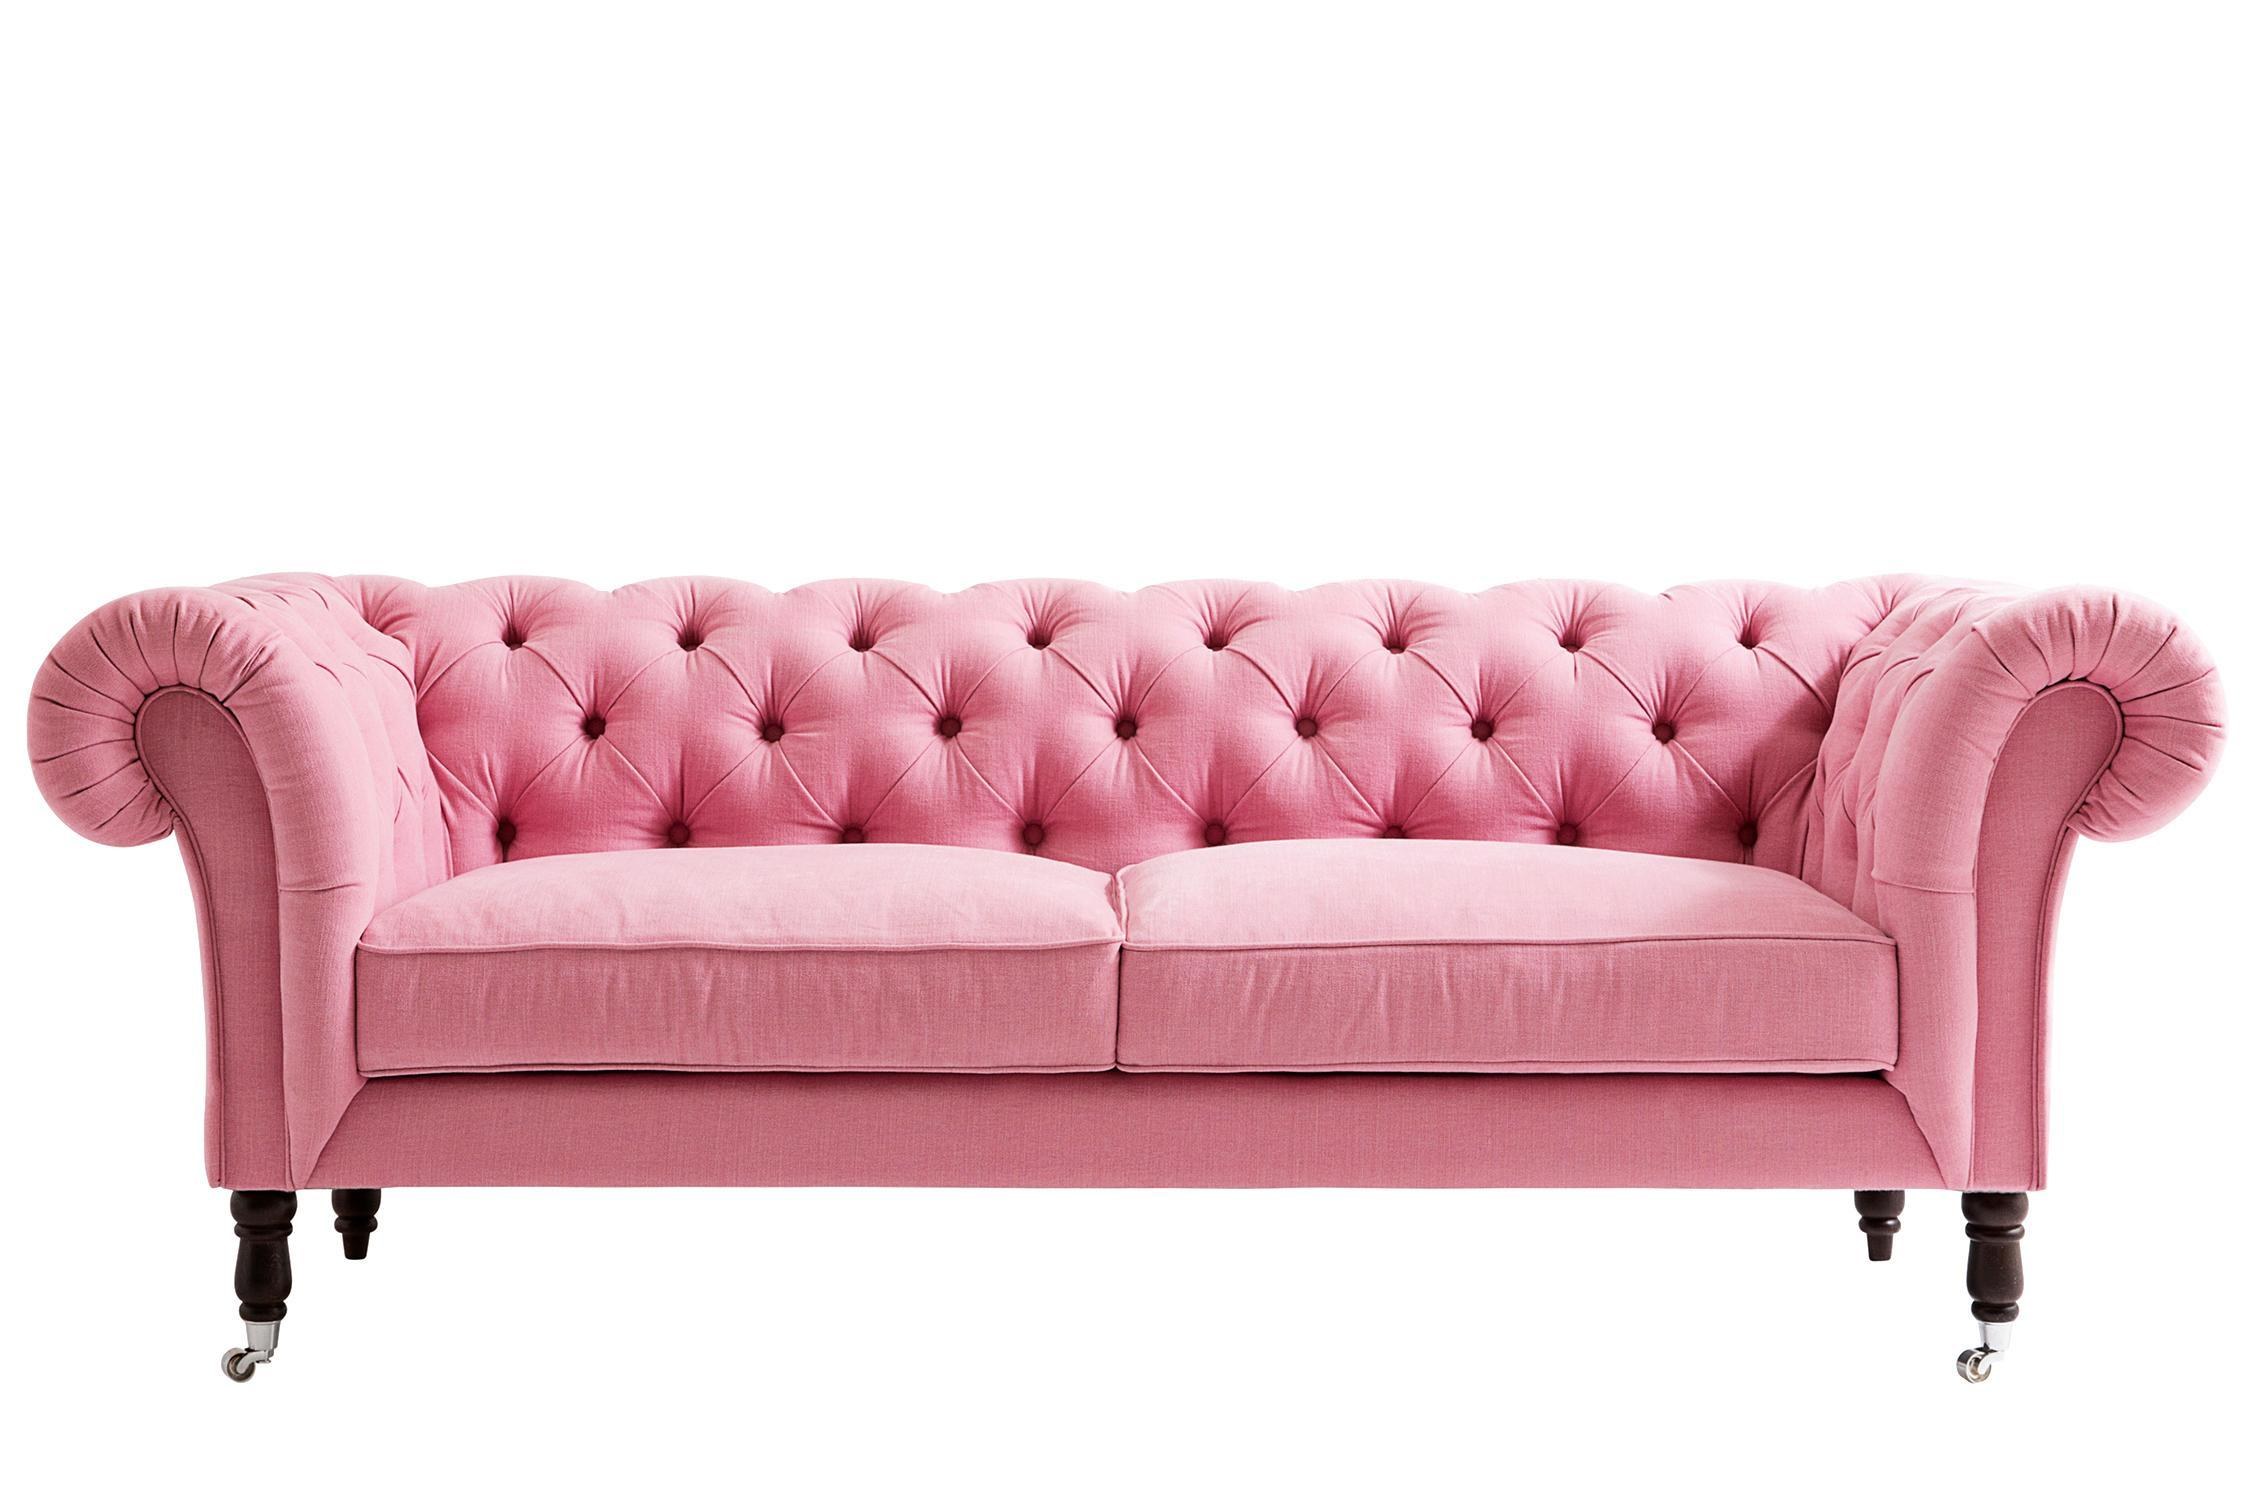 Cat sofa розовые. Диван Честер розовый. Пудровый диван Честер. Диван Честер фиолетовый. Честер угловой диван.